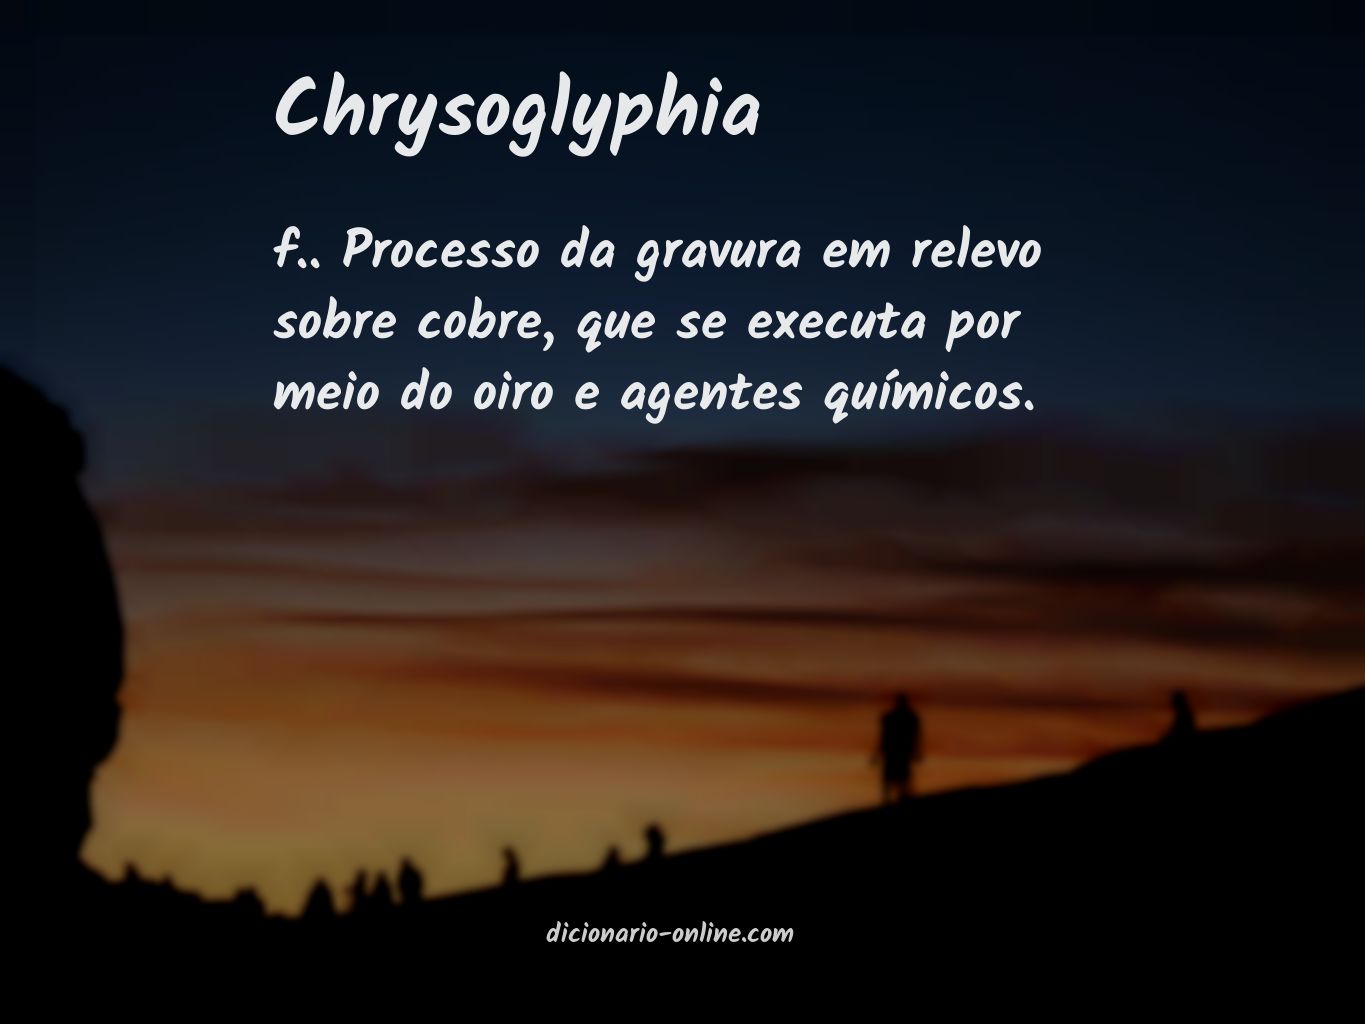 Significado de chrysoglyphia